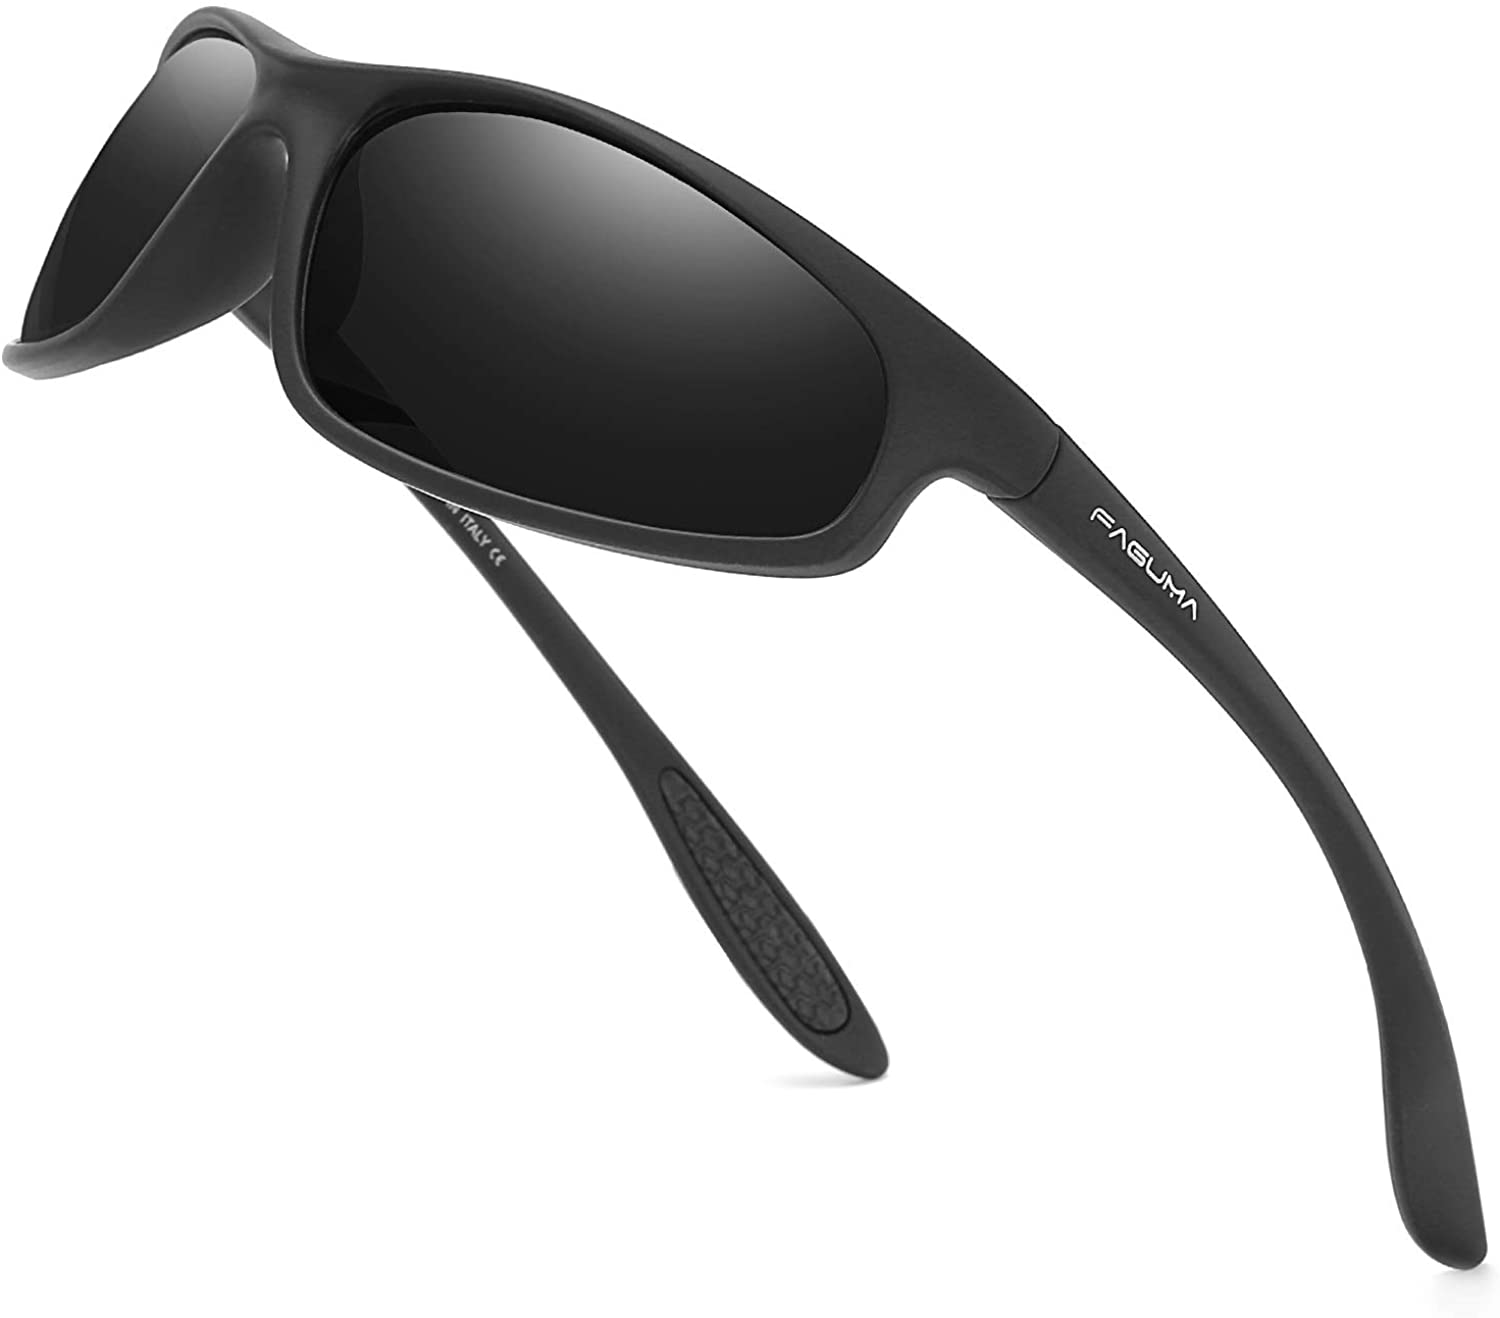 FAGUMA Sports Polarized Sunglasses For Men Cycling Driving Fishing